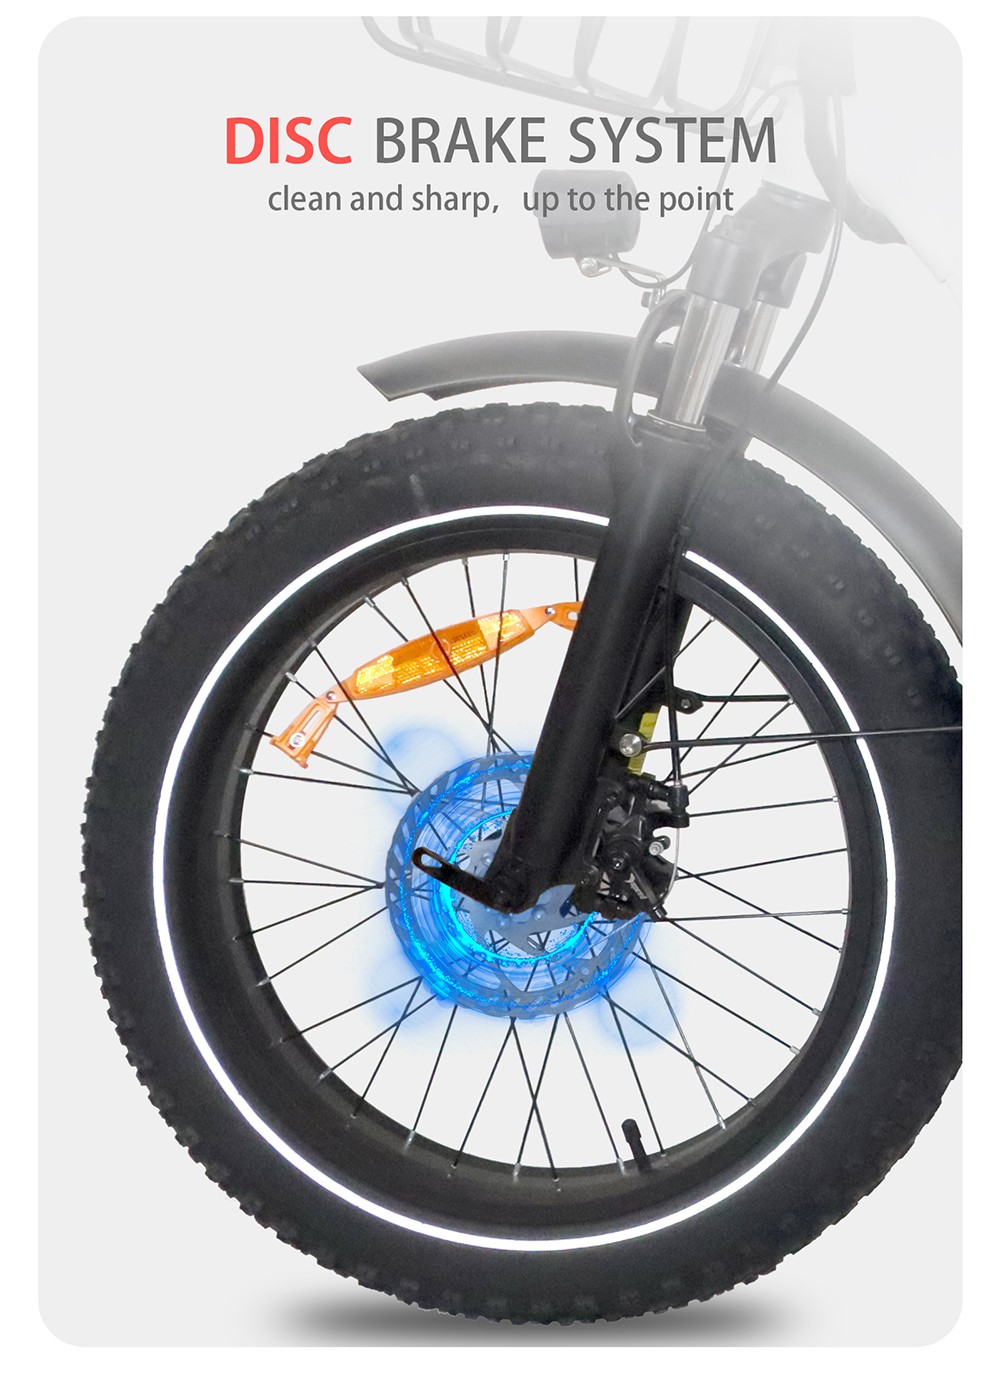 Bicicleta elétrica BAOLUJIE DZ2030, pneu de 20 * 4.0 polegadas 500 W Motor 48V 13Ah Bateria removível 40km / h Velocidade máxima 35-45km Alcance SHIMANO 7 velocidades - Preto